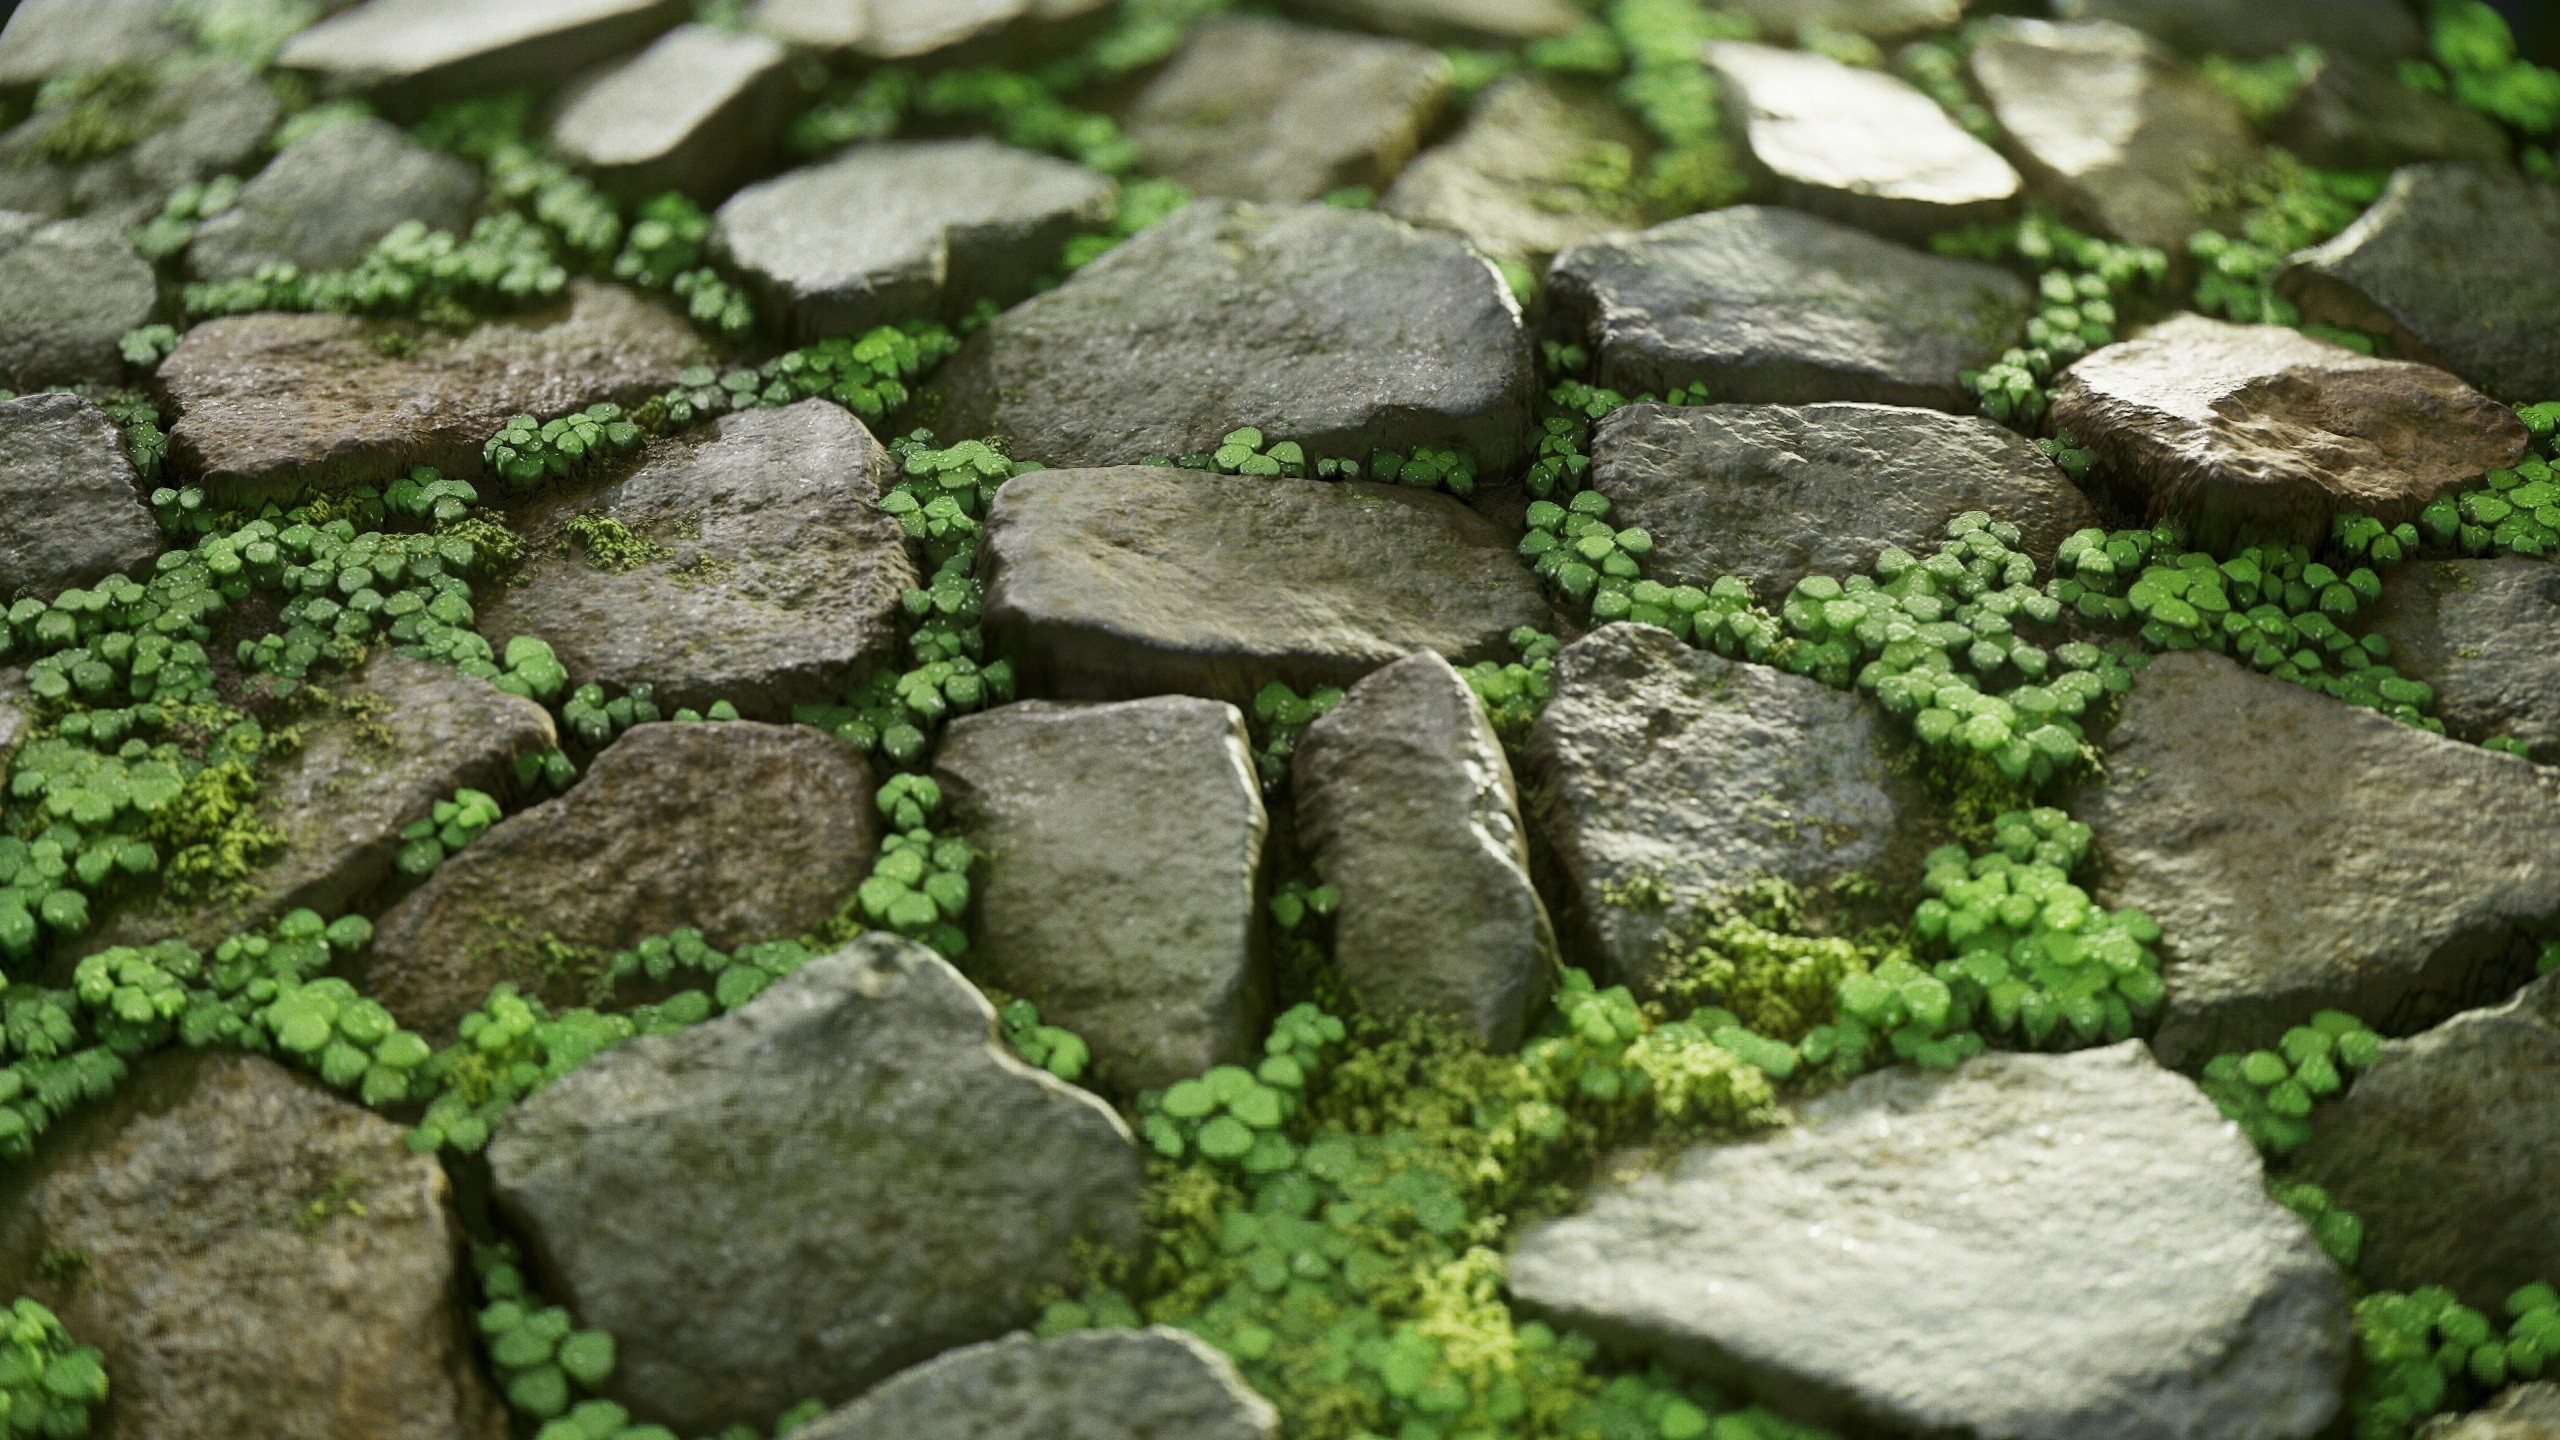 General 2560x1440 grass digital art cobblestone rocks nature Vasilina Sirotina clovers stones